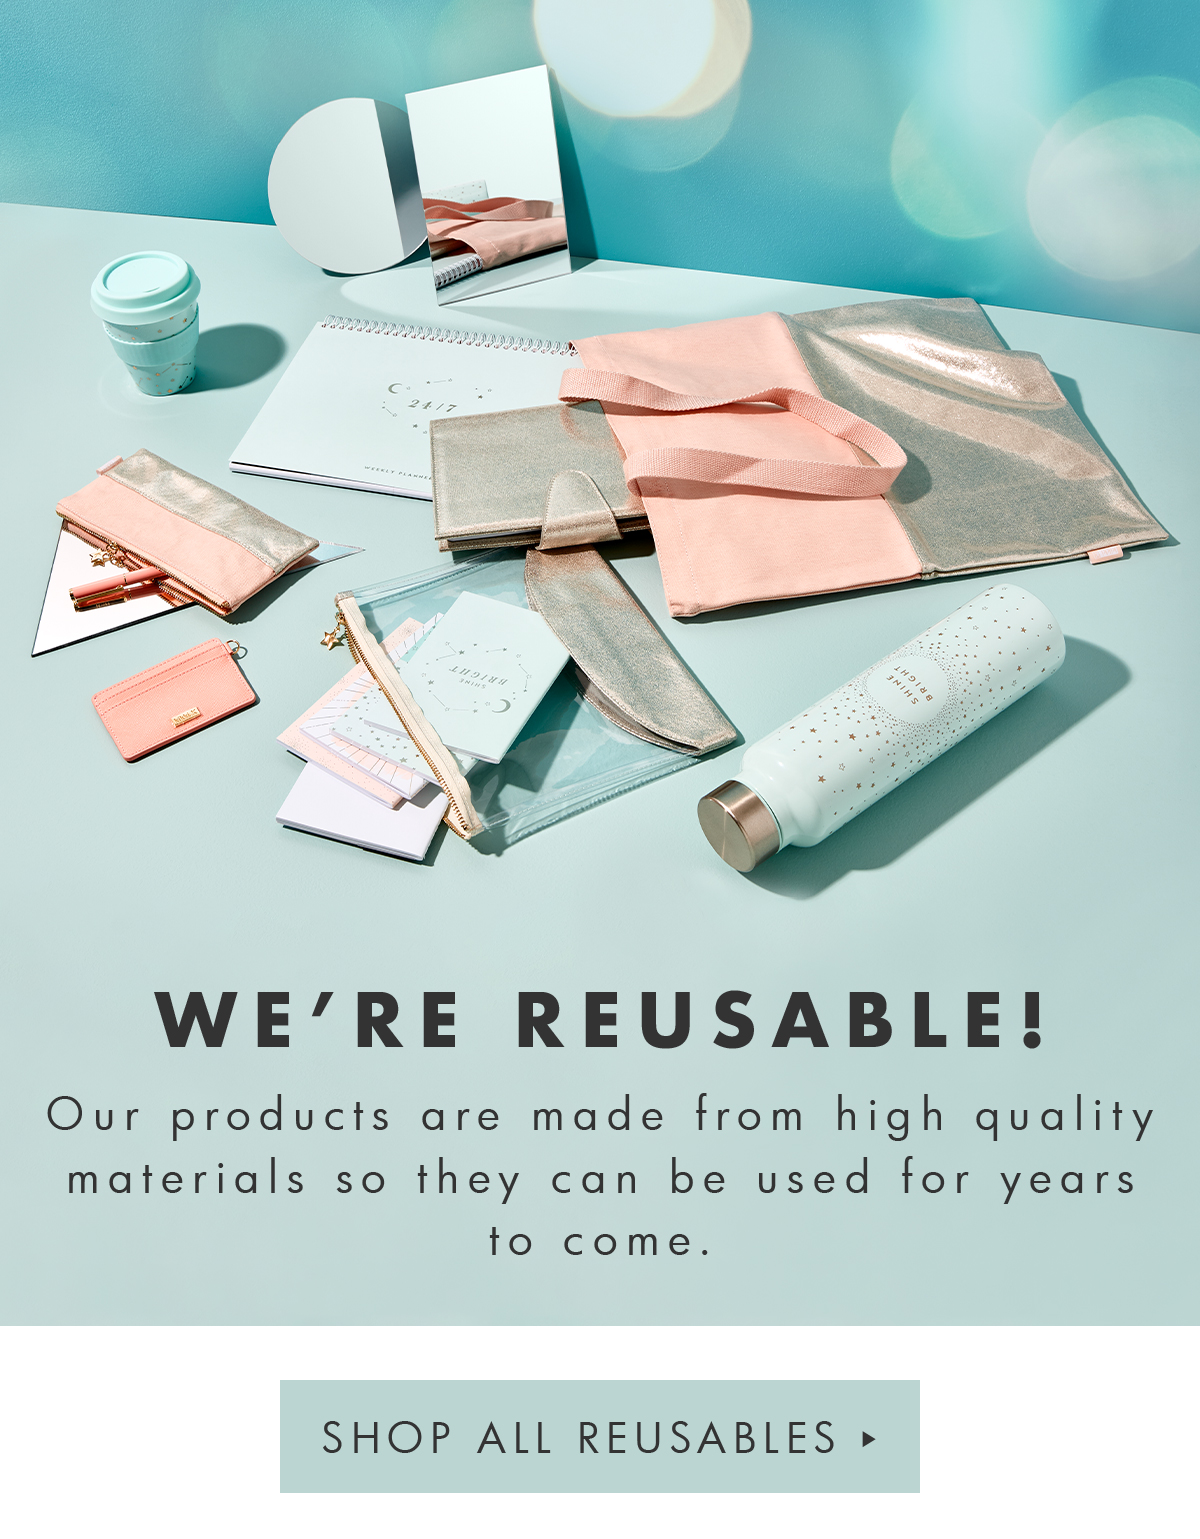 We're Reusable. Shop all reusables.